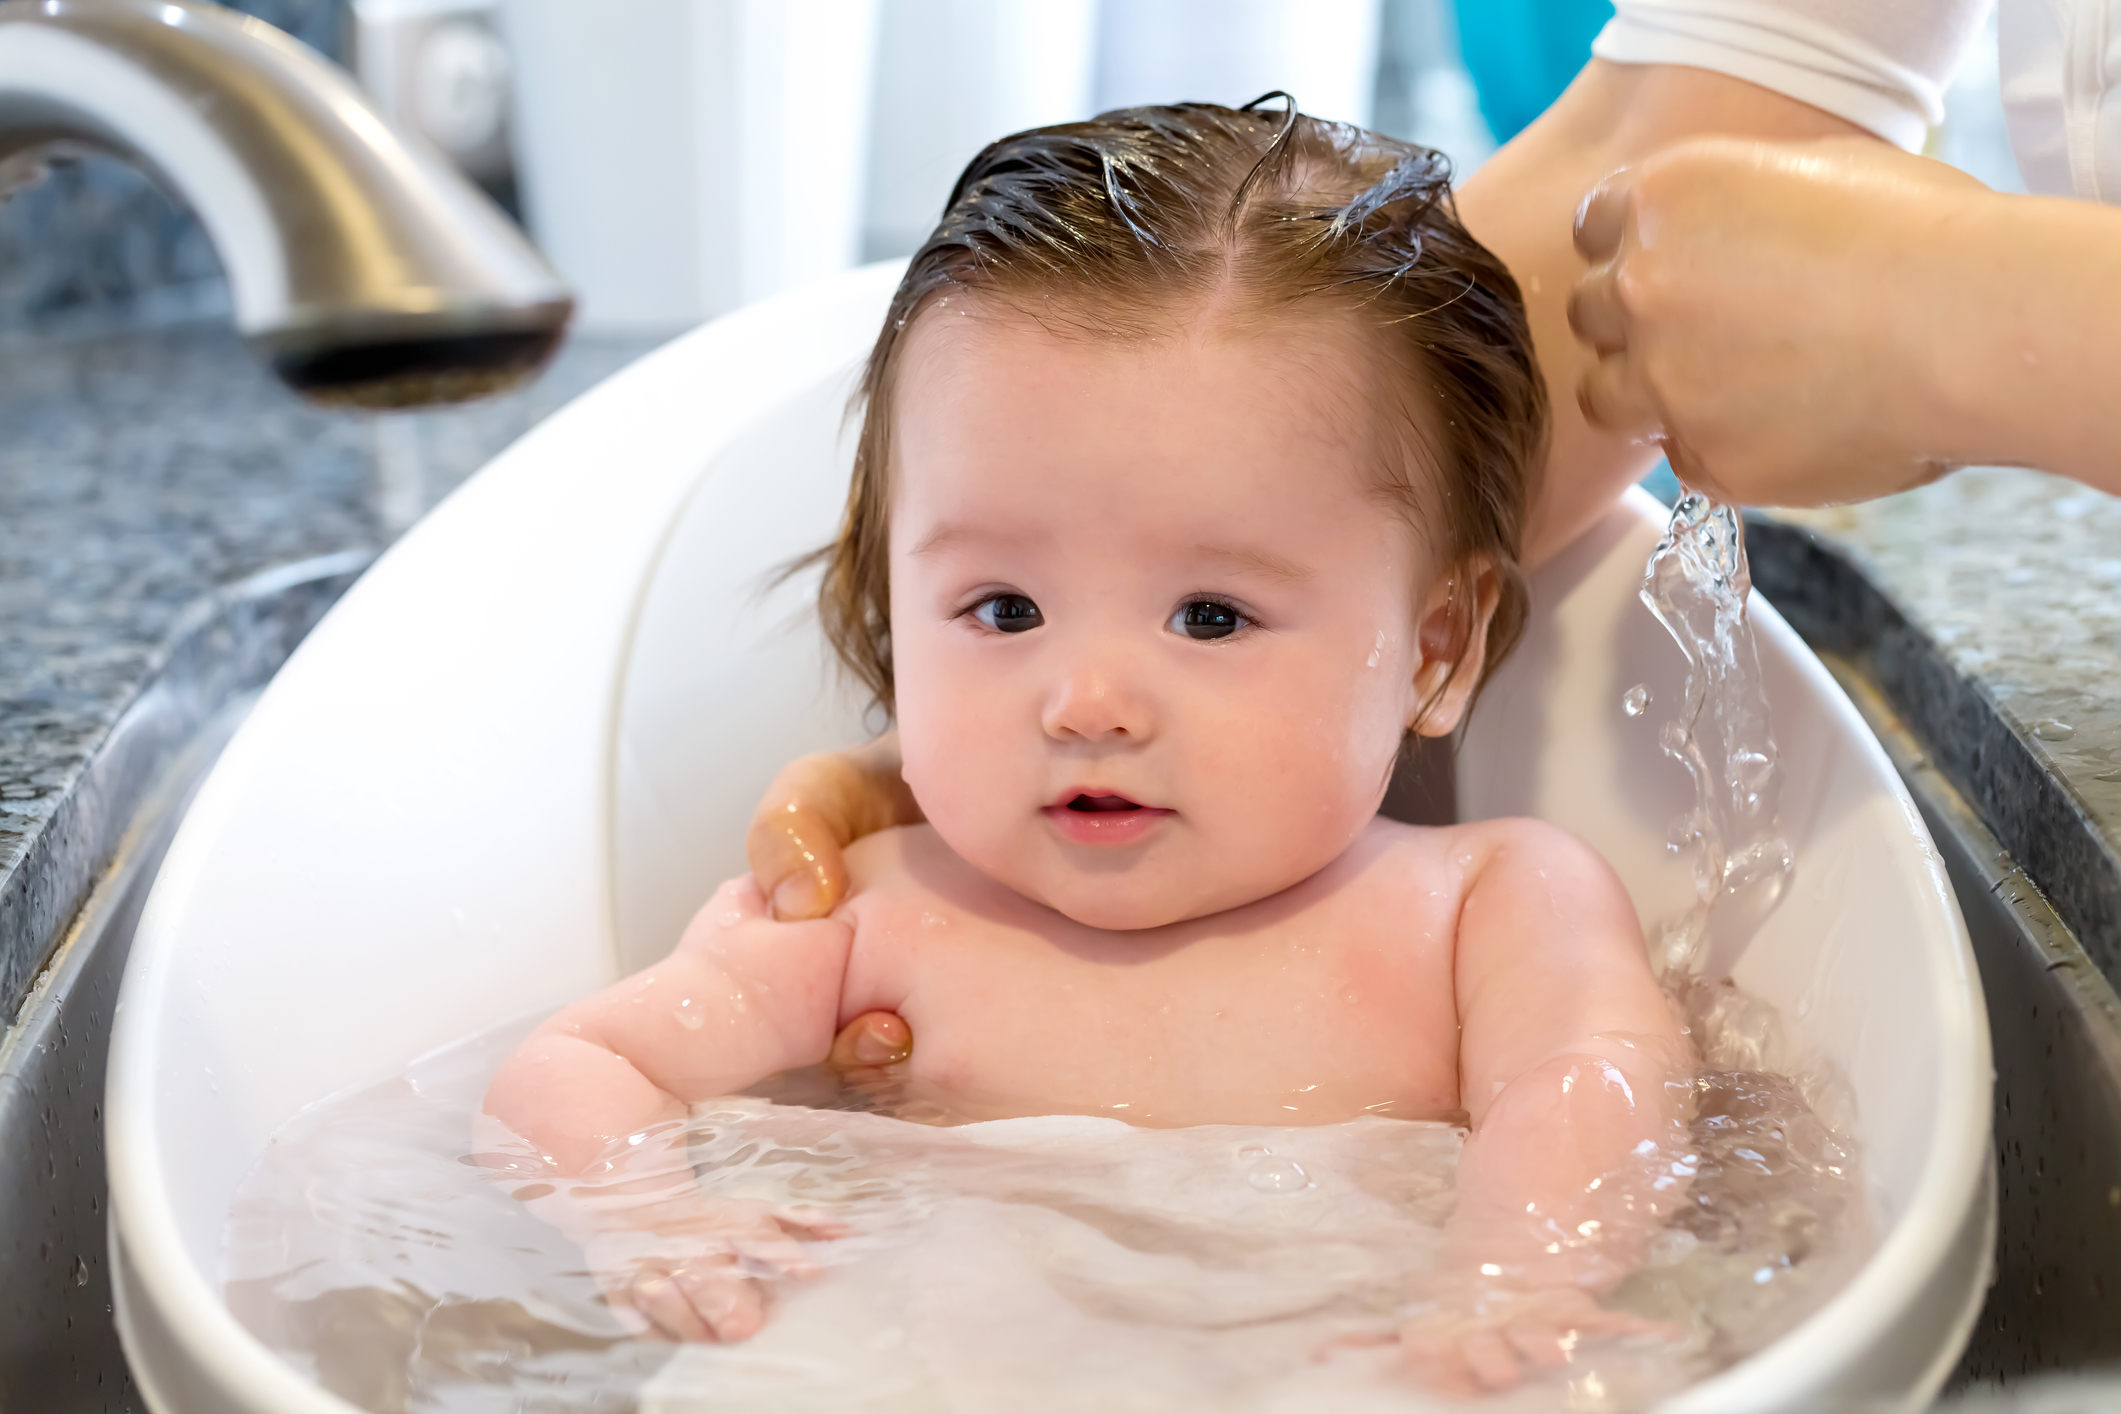 A baby takes a bath in a little tub